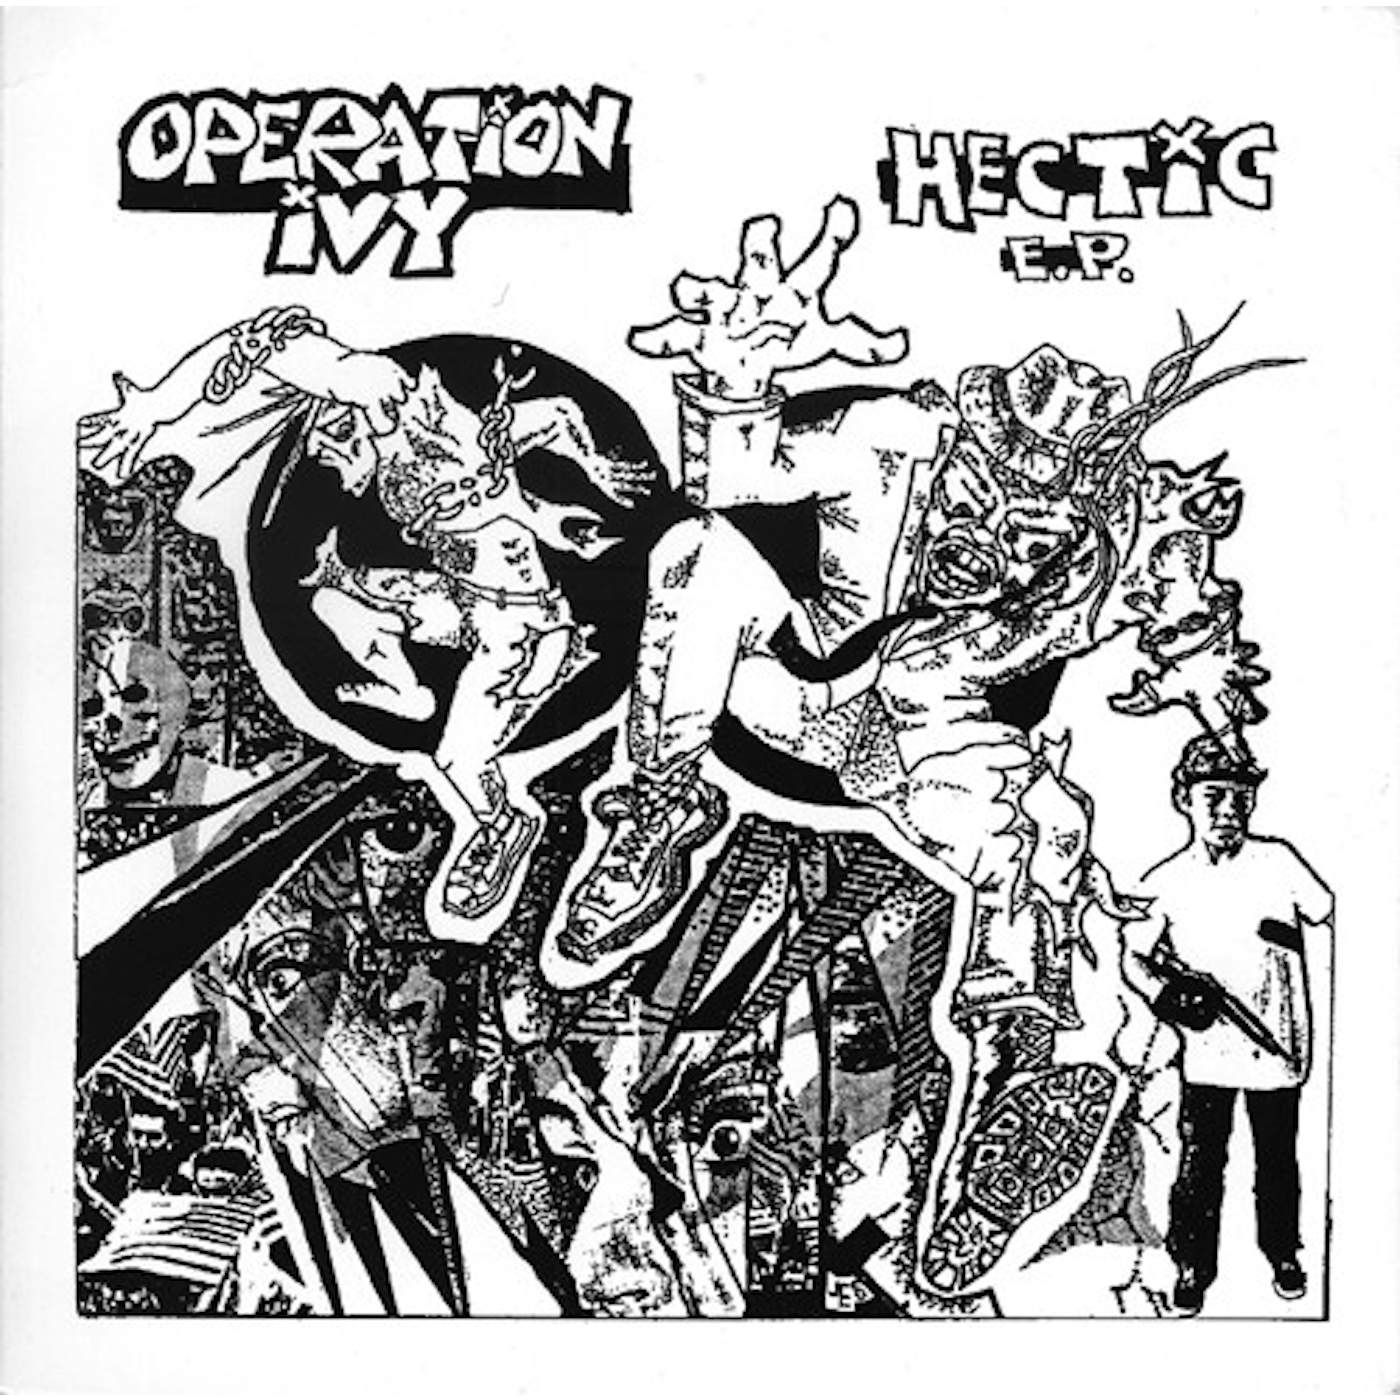 Operation Ivy HECTIC Vinyl Record